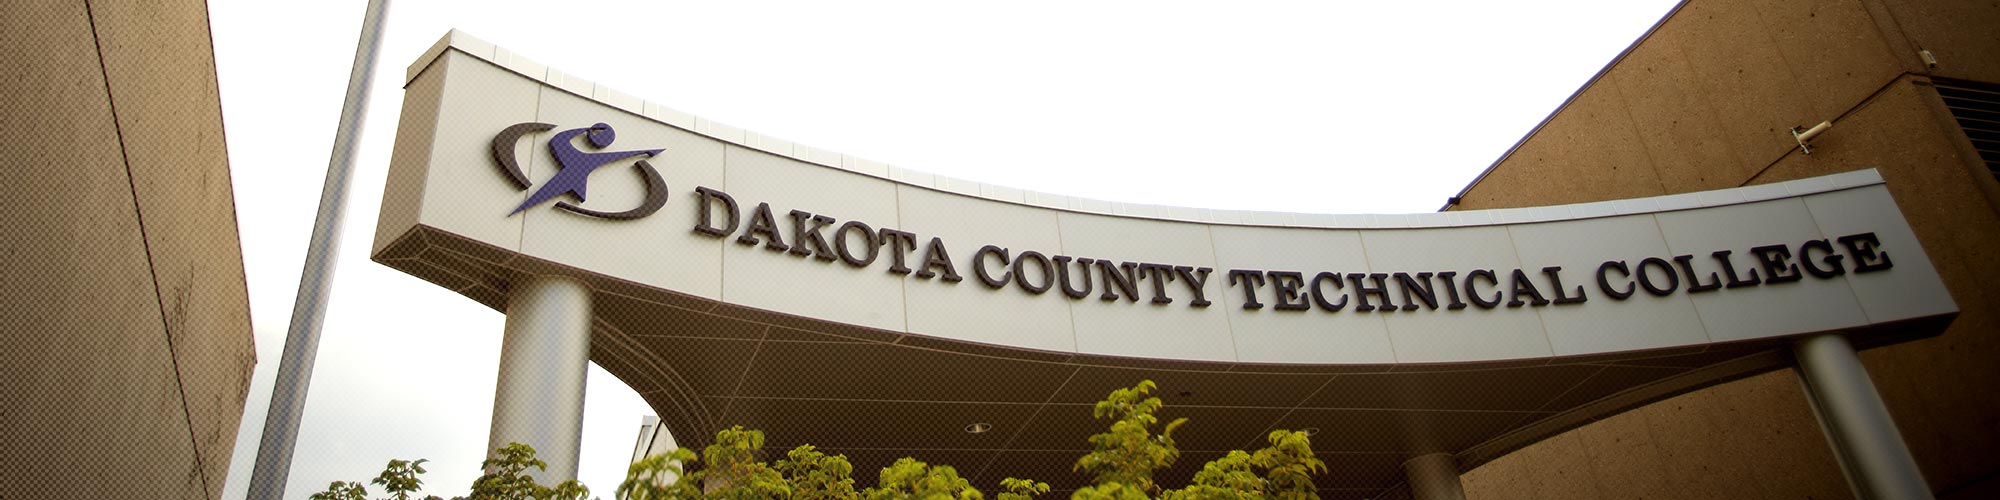 Dakota County Technical College entrance